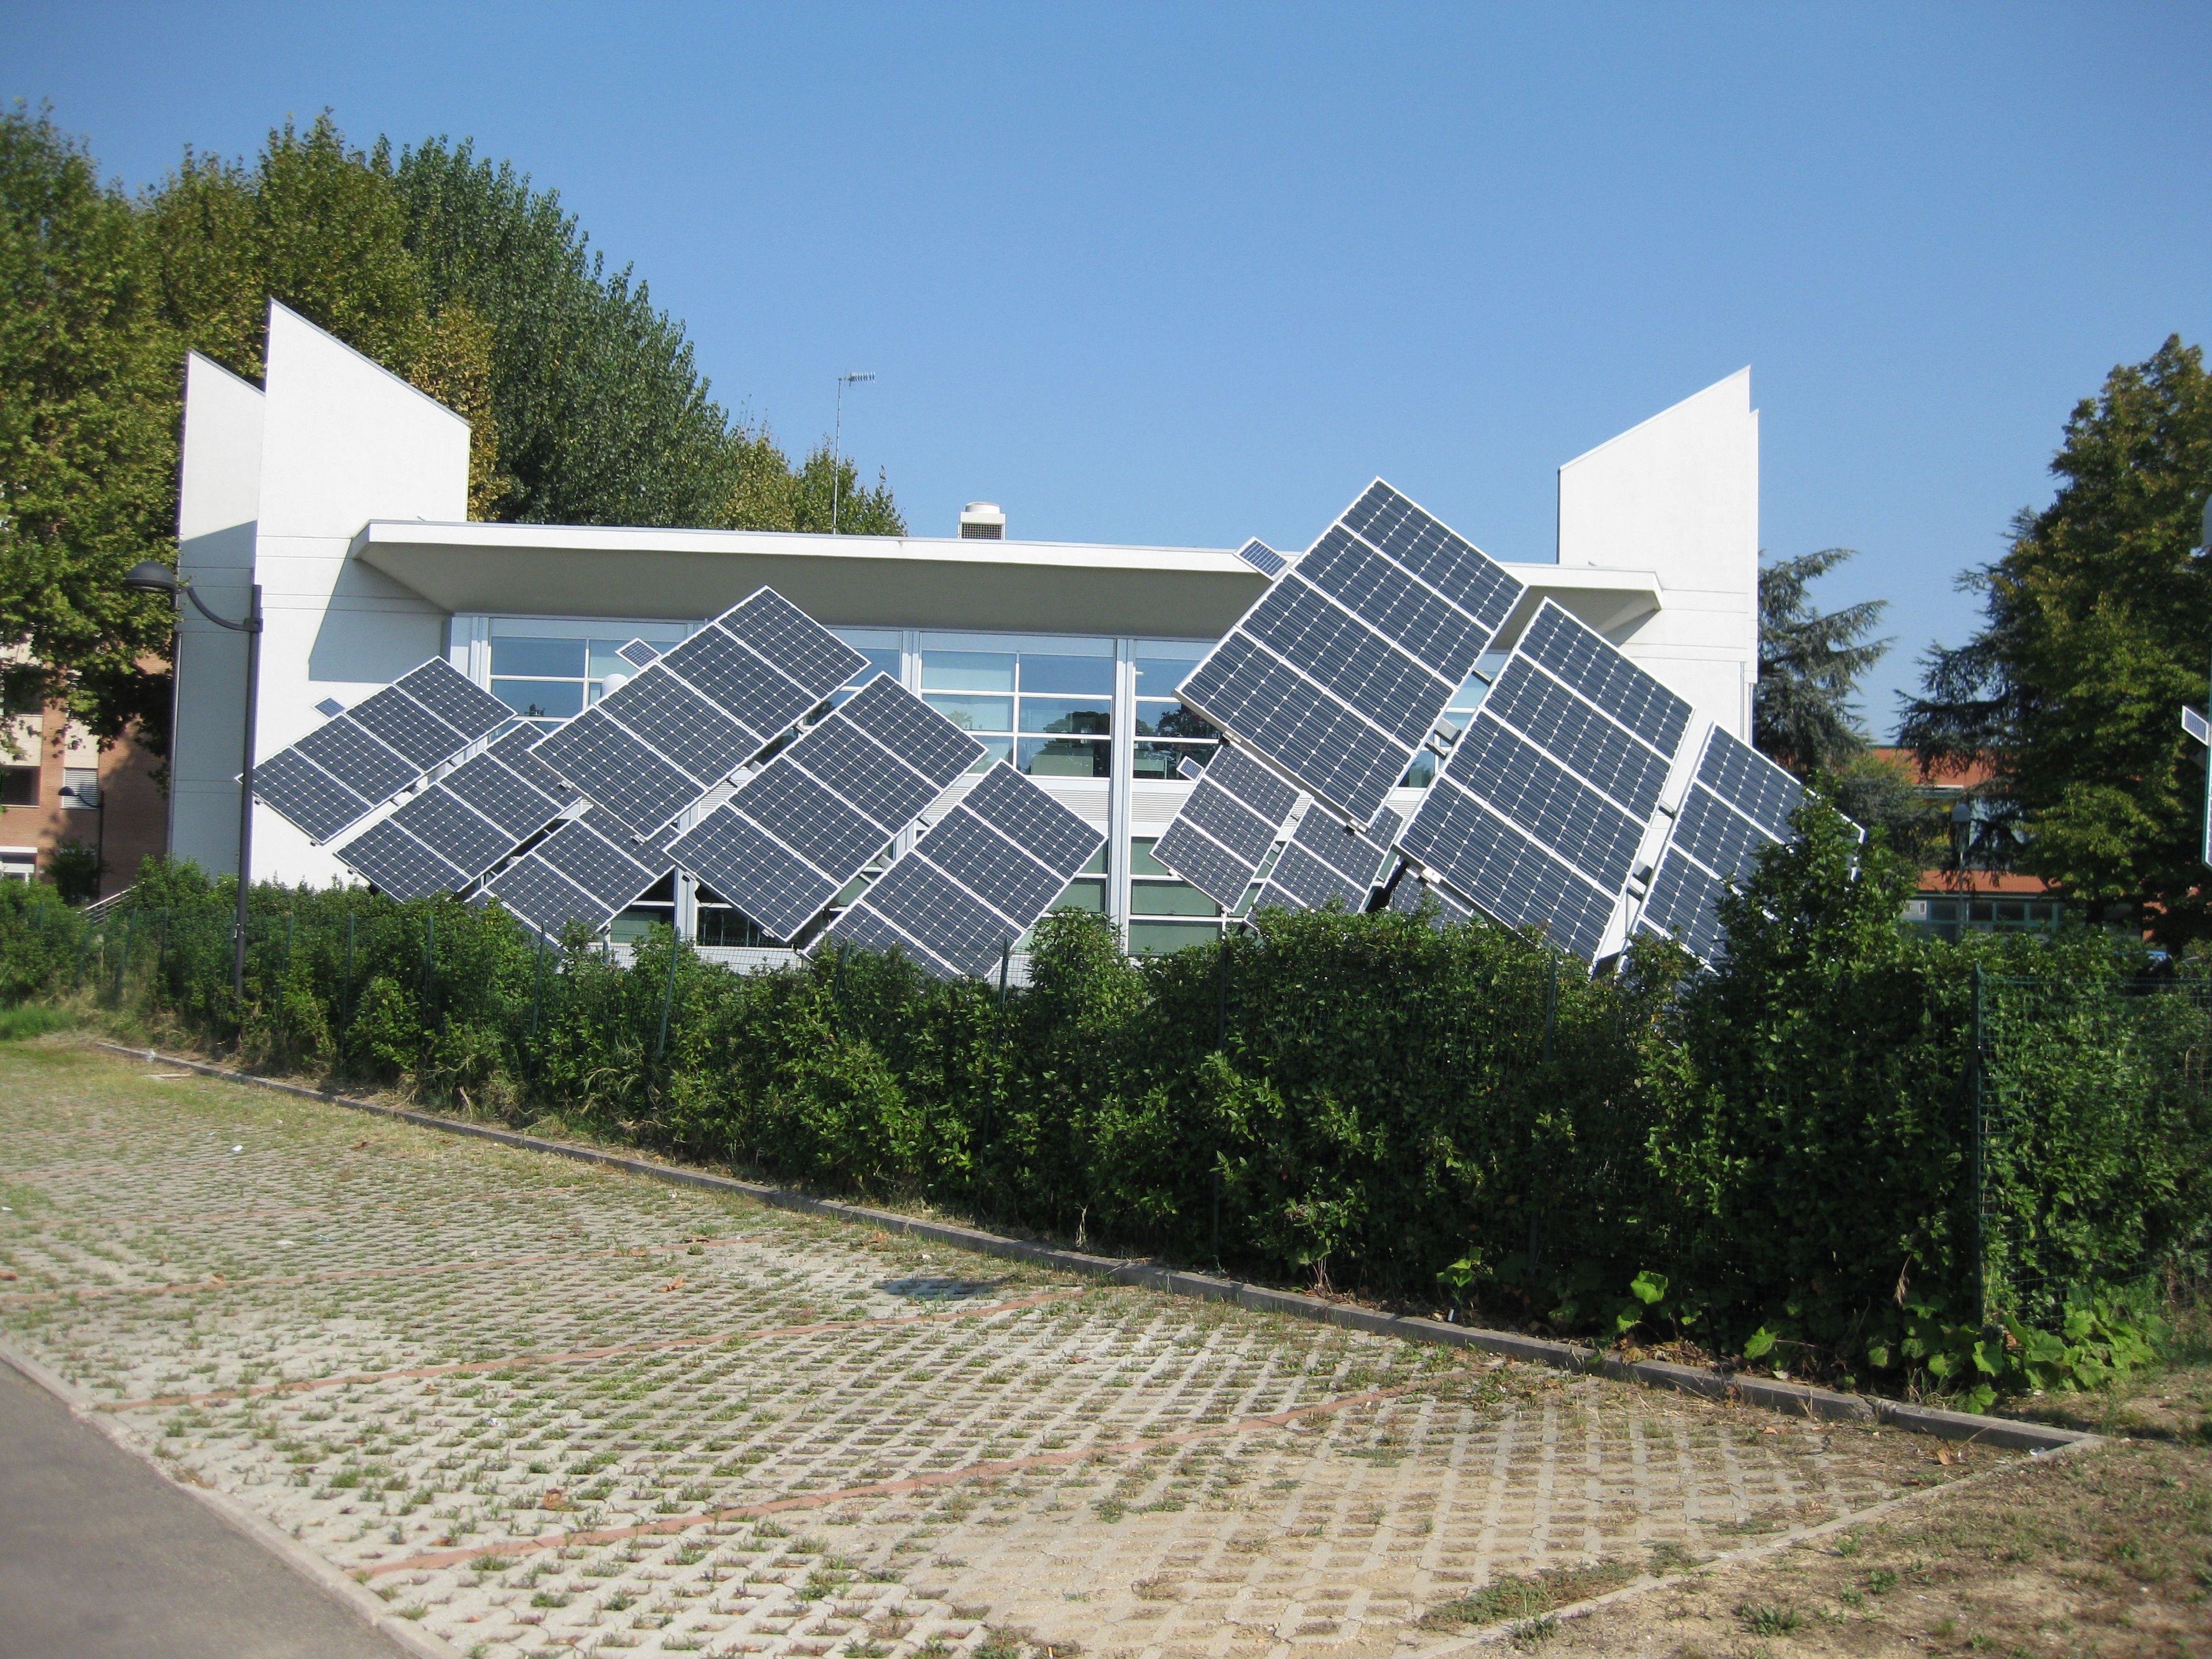 Varios paneles solares en un chalet.